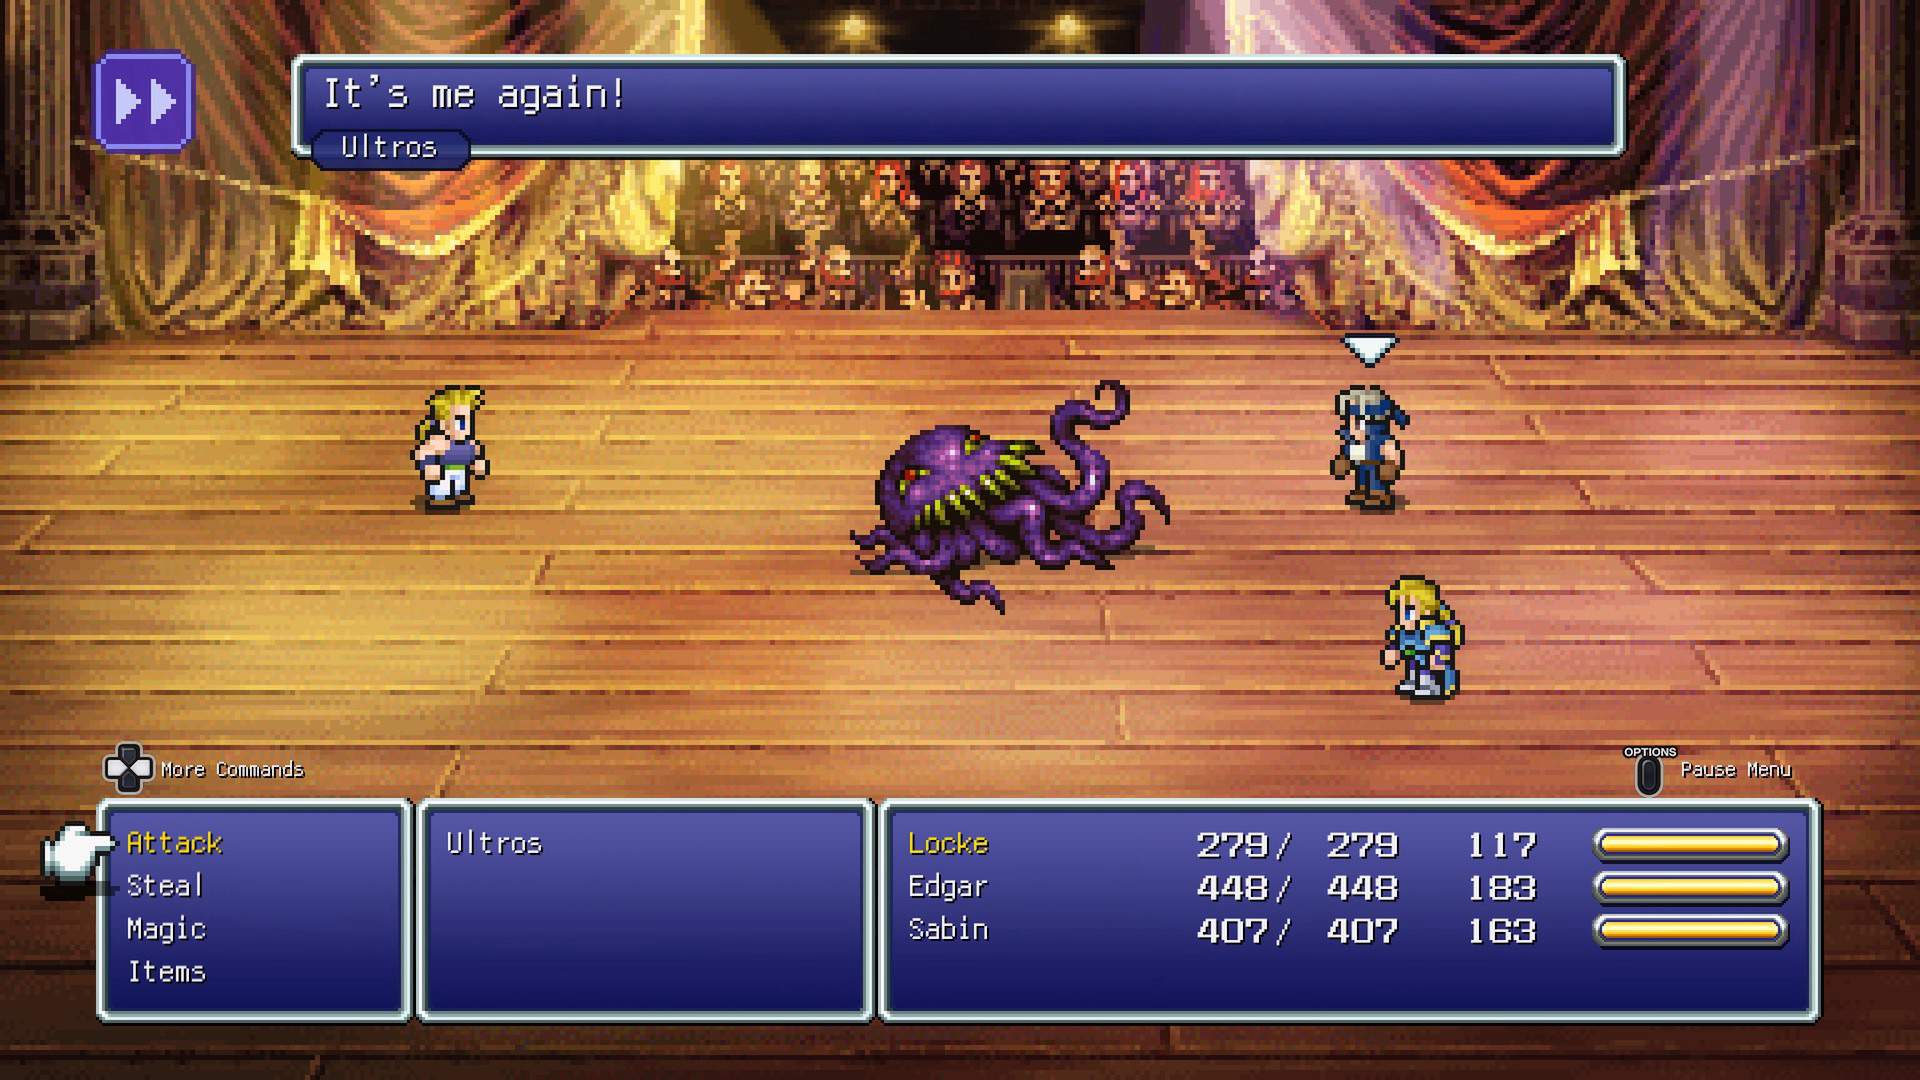 Final Fantasy VI Pixel Remaster Review - Nova Crystallis